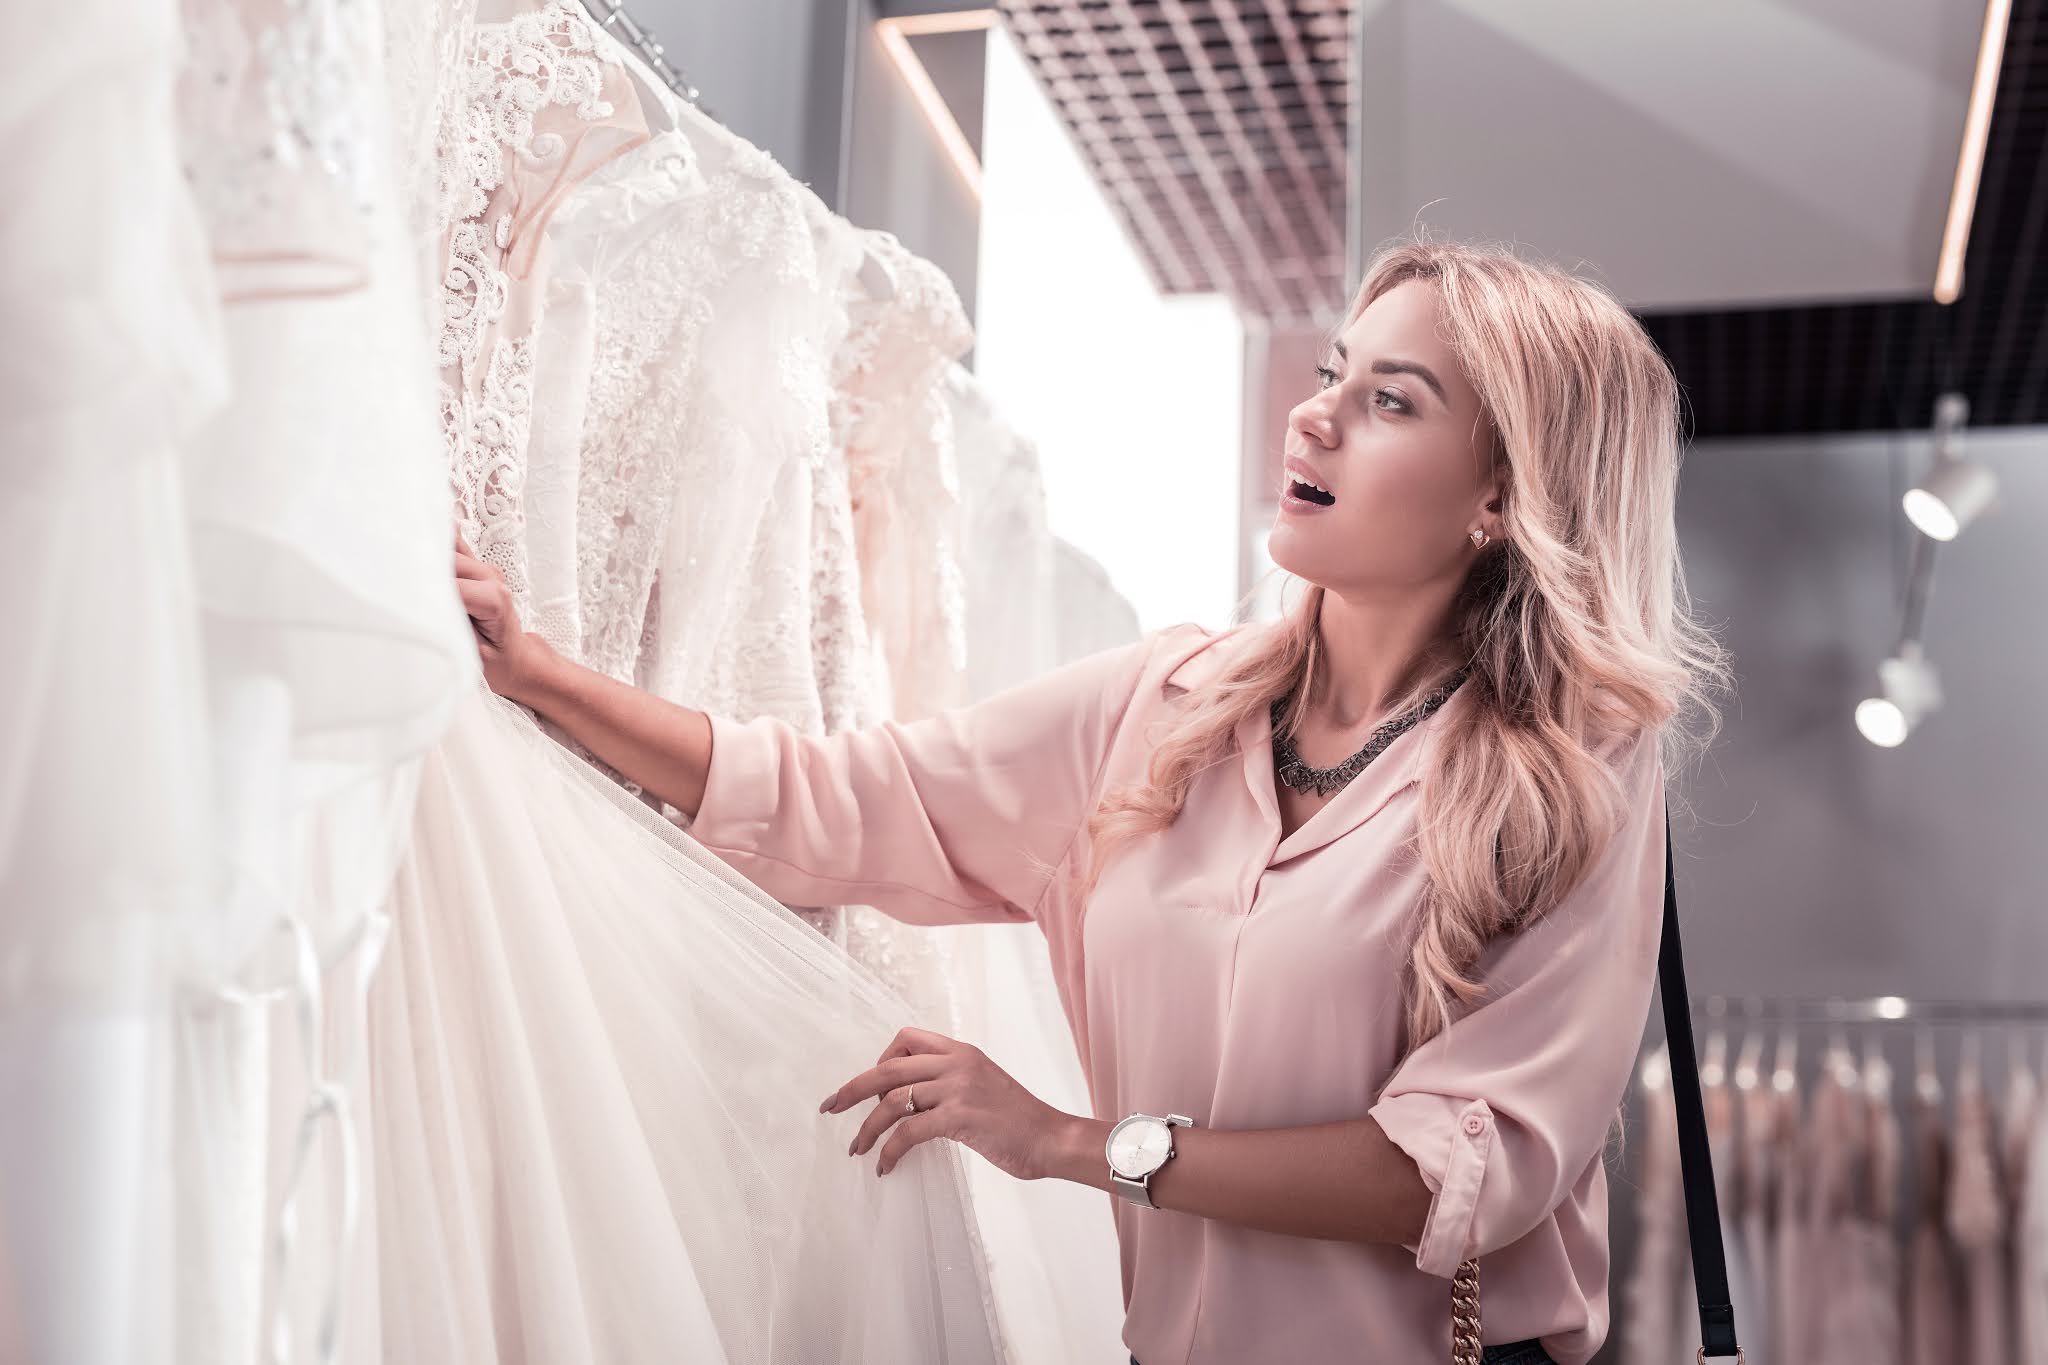 Pop Up Wedding Dress Sale Edmonton   Opportunity Bridal